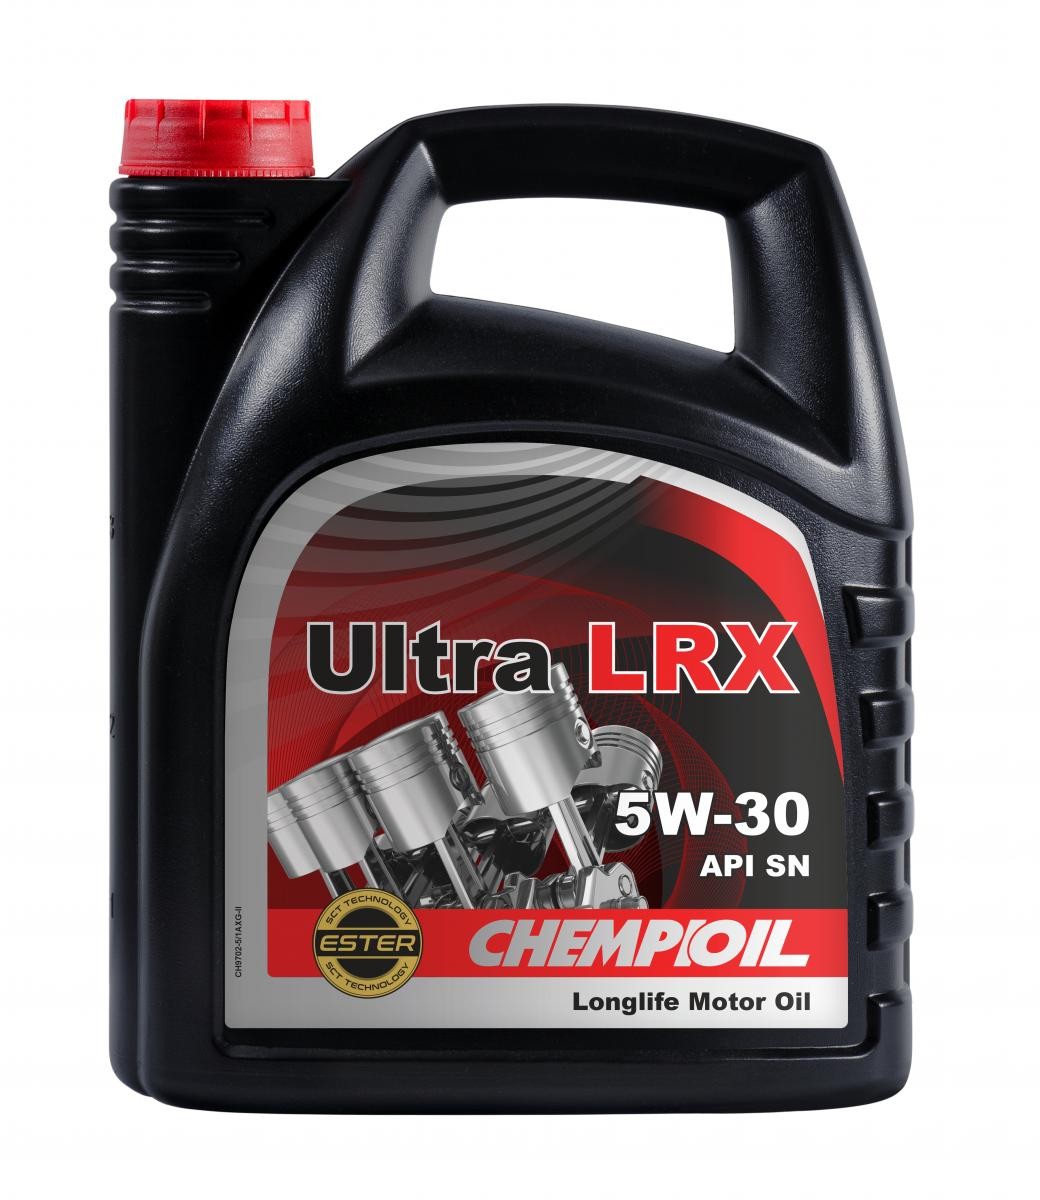 Comprar Aceite para motor CHEMPIOIL CH9702-5 Ultra, LRX 5W-30, 5L